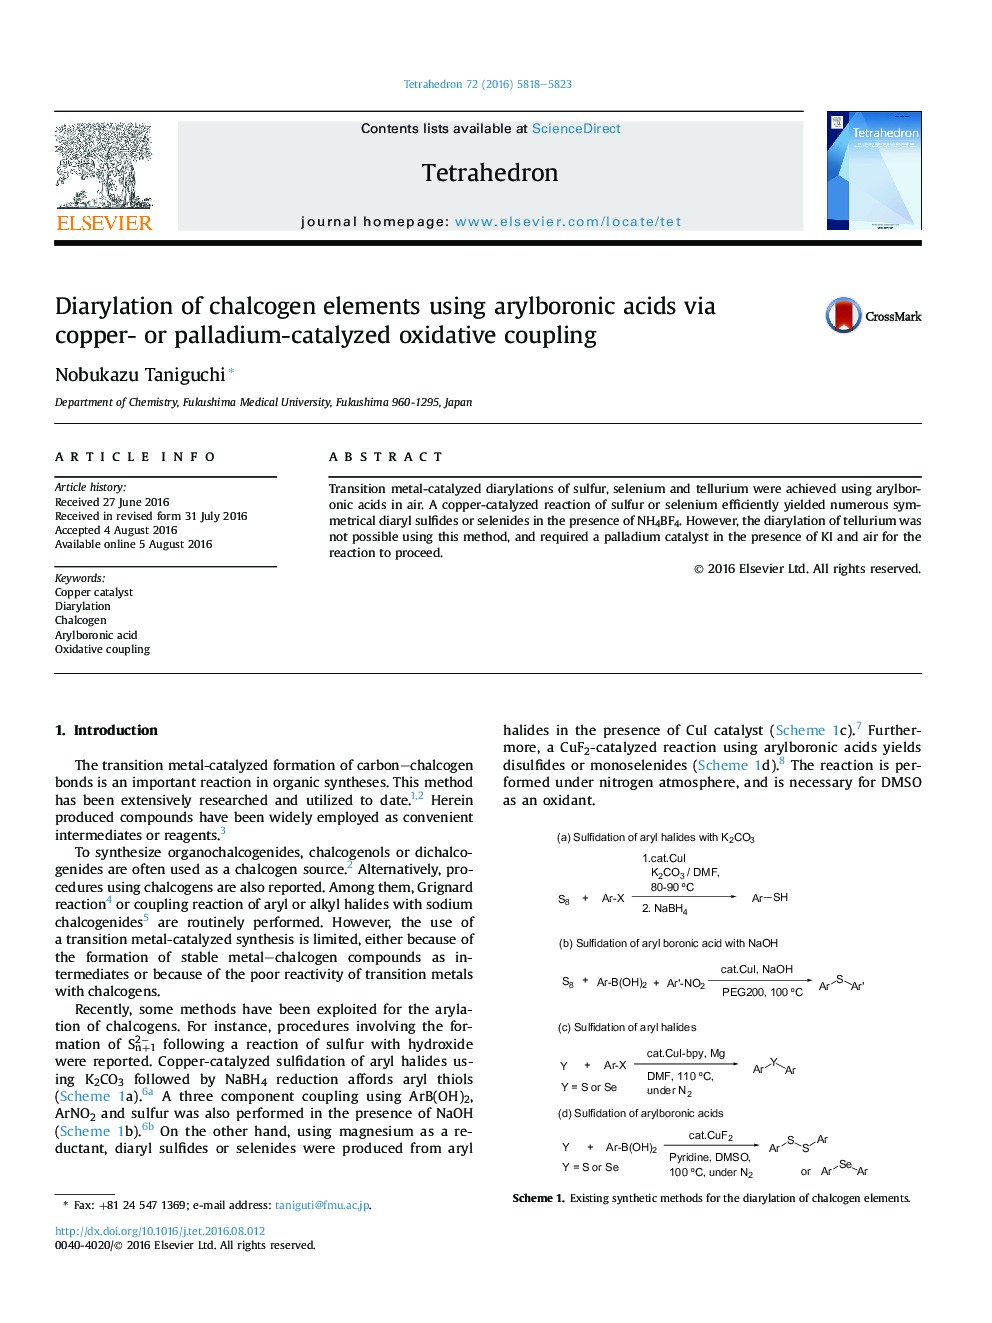 Diarylation of chalcogen elements using arylboronic acids via copper- or palladium-catalyzed oxidative coupling